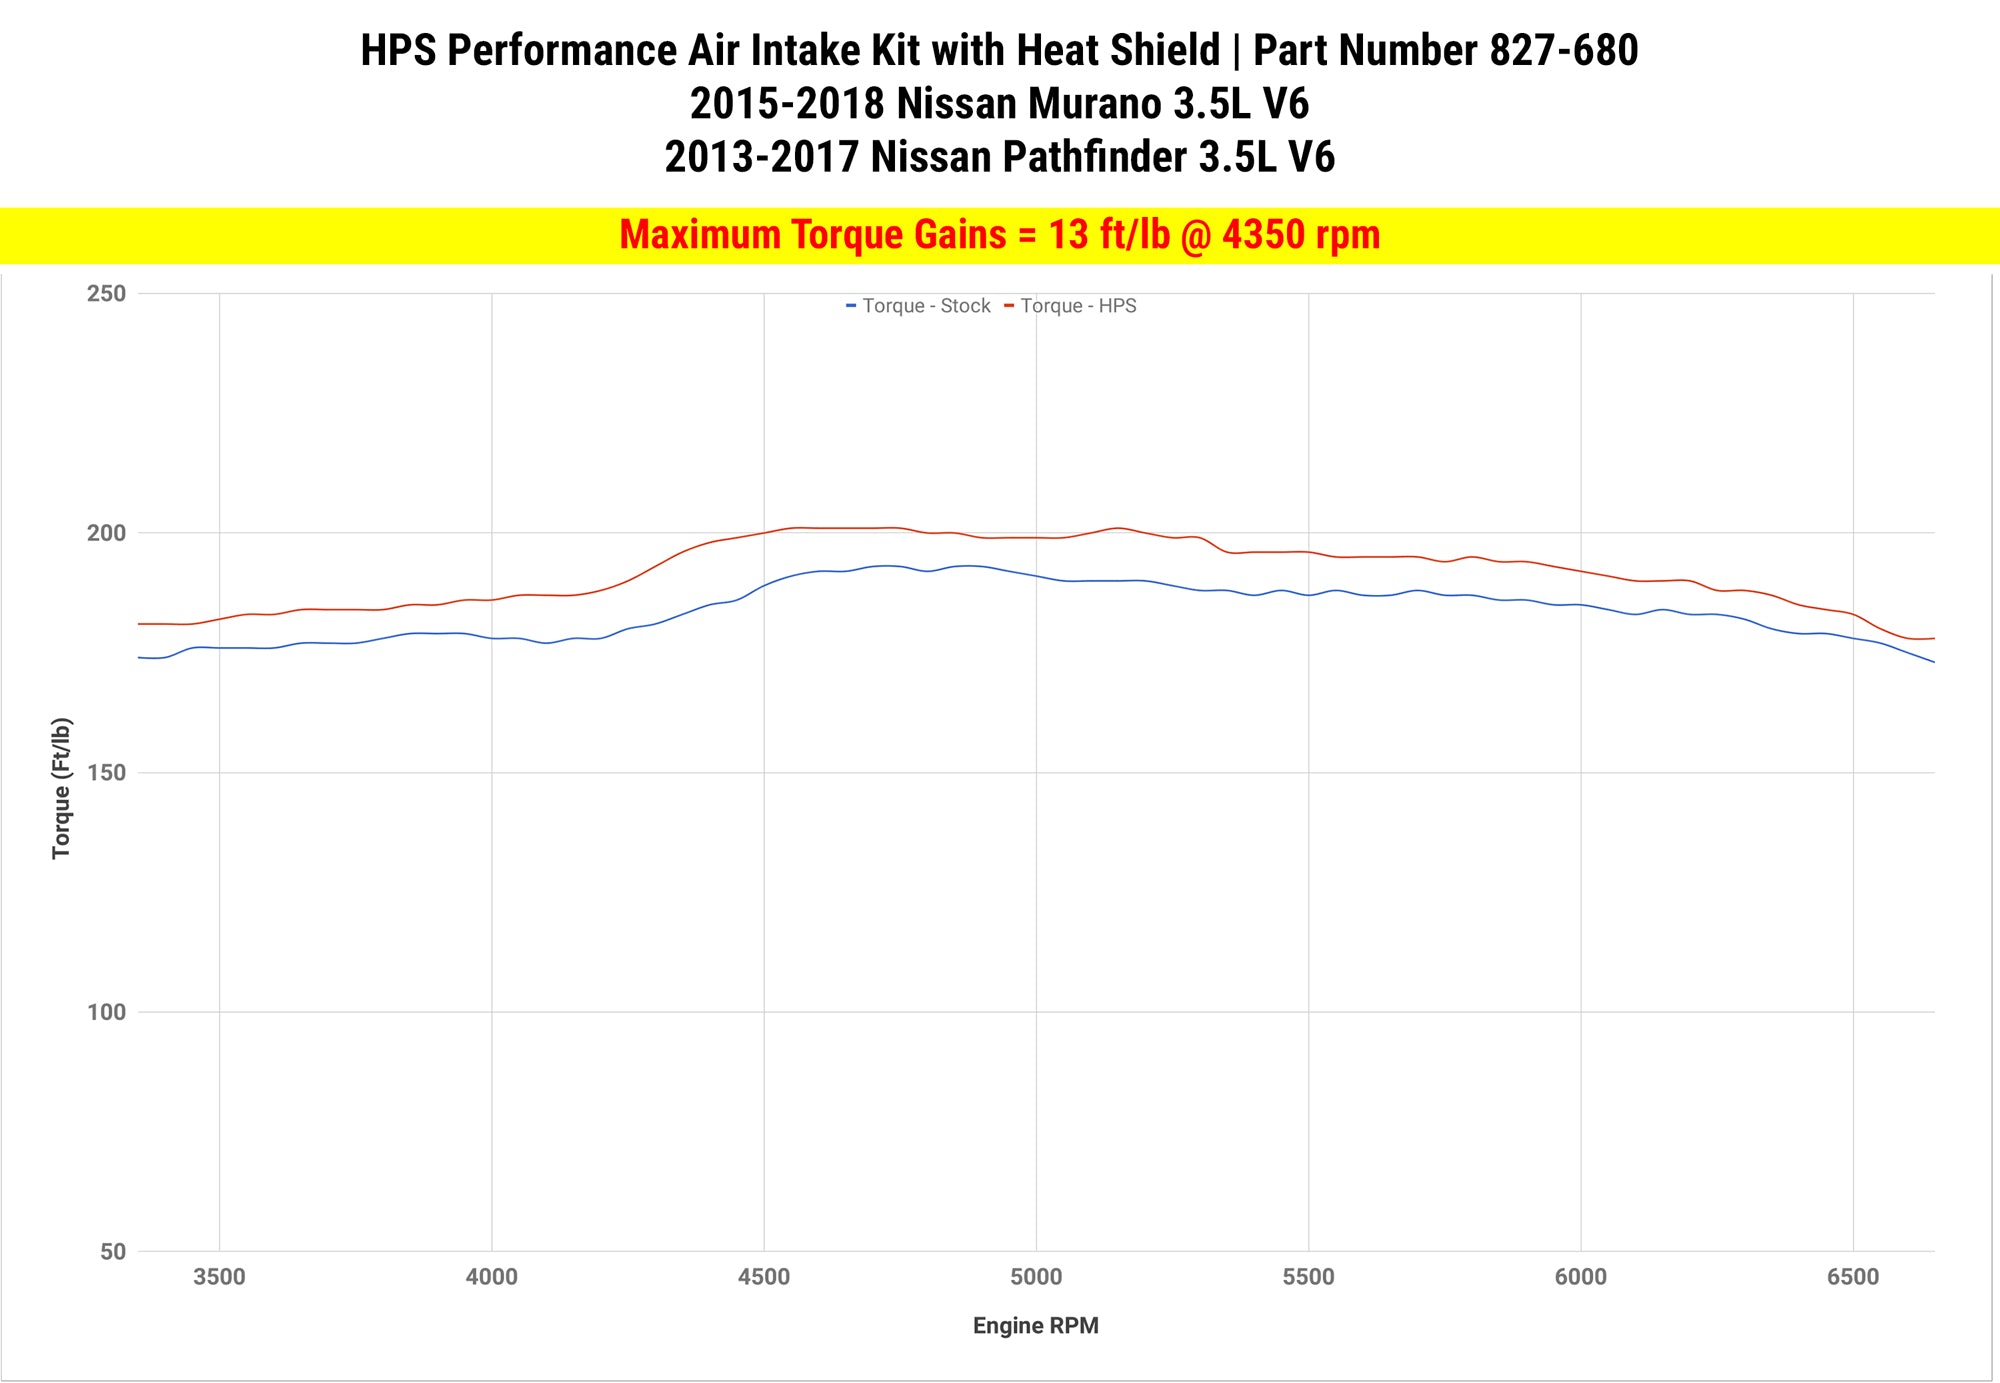 Dyno proven gains 13 ft/lb HPS Performance Shortram Air Intake Kit 2015-2018 Nissan Murano 3.5L V6 827-680WB